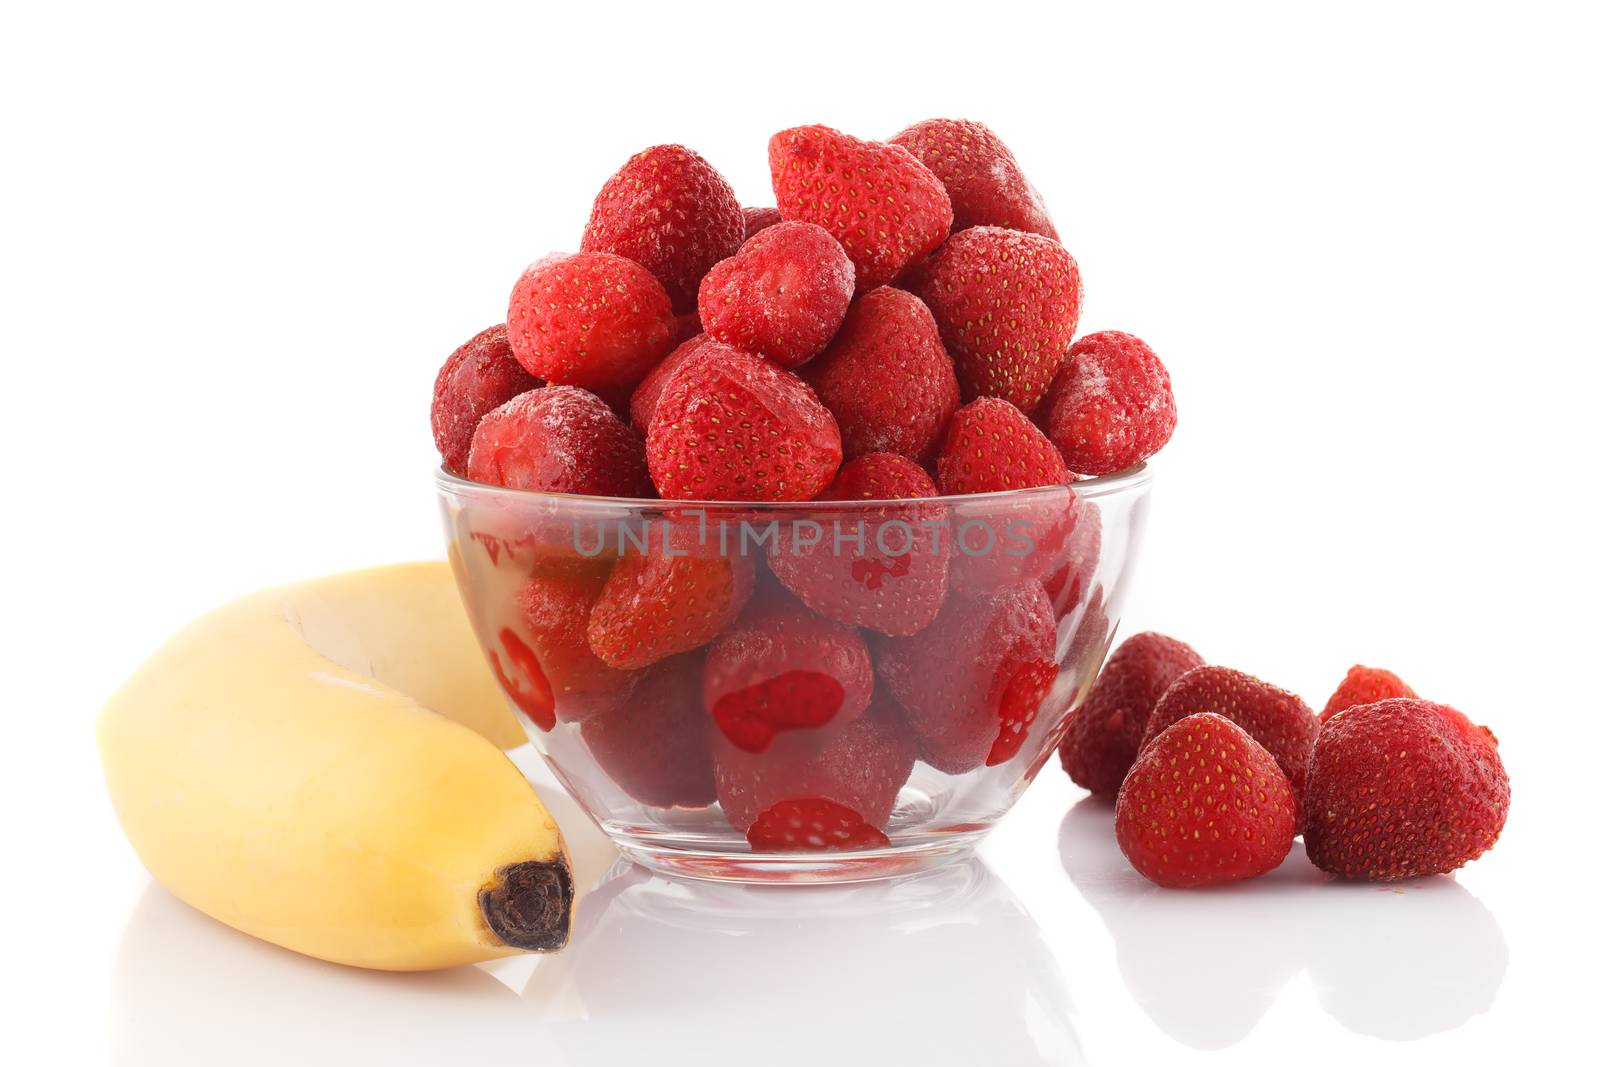 Natural fresh strawberries by baronvsp